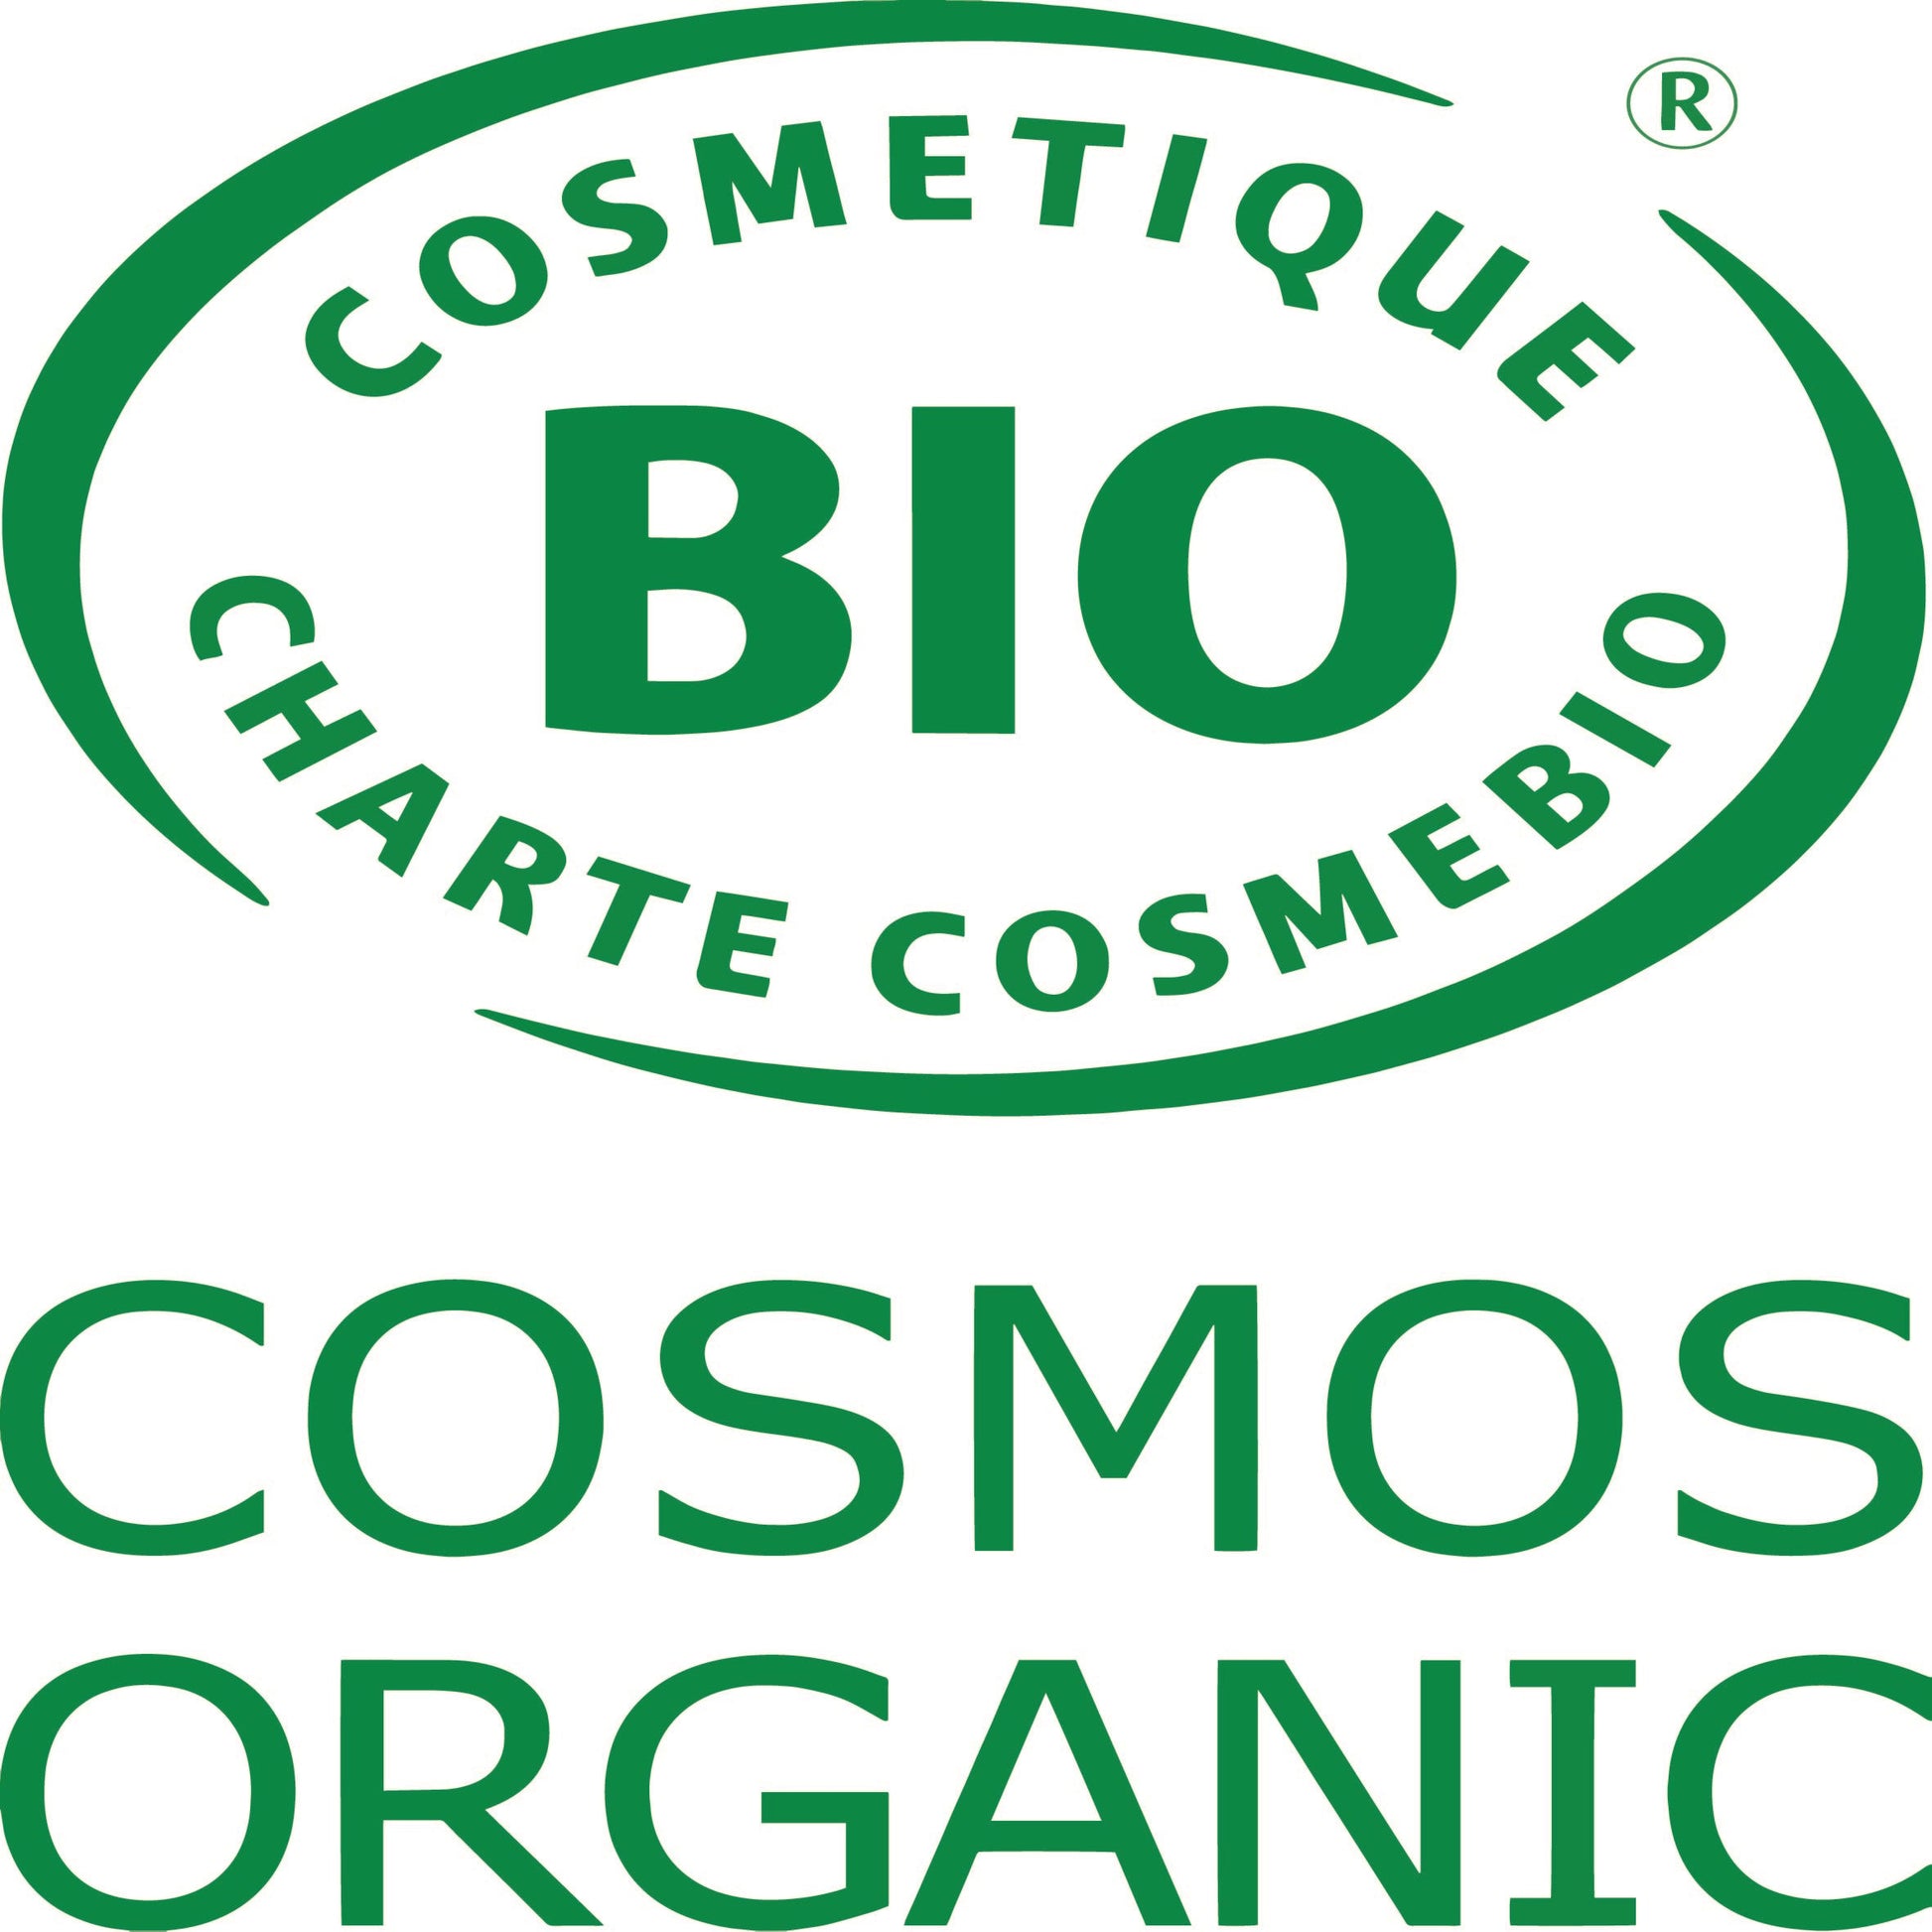 MINI BUNDLE - 9 x 60g Organic Certified Solid Shampoo - 1 of each type - Earthsenseorganics